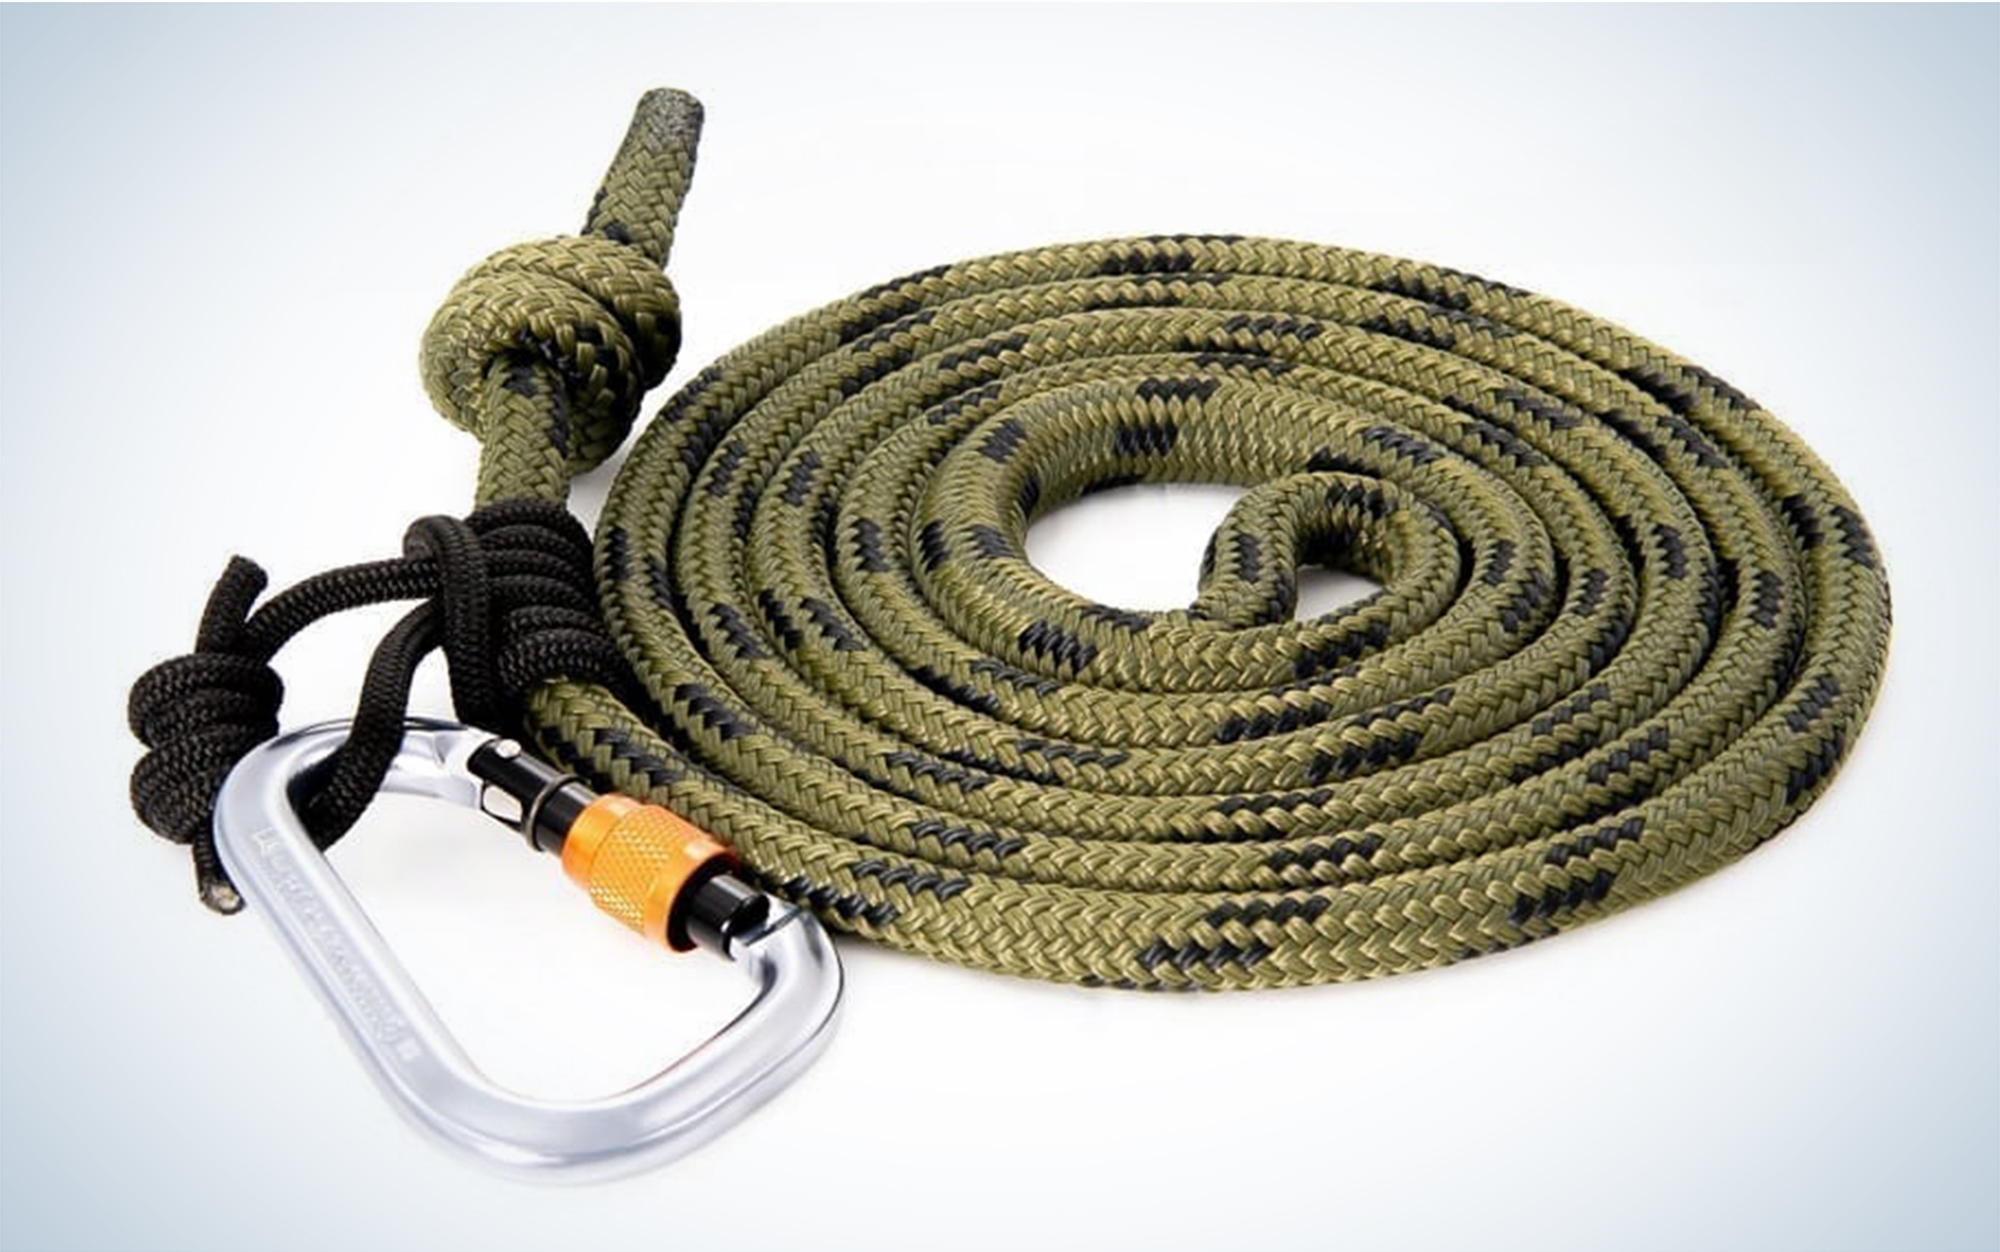 You need a linemanâs rope for treestand safety.